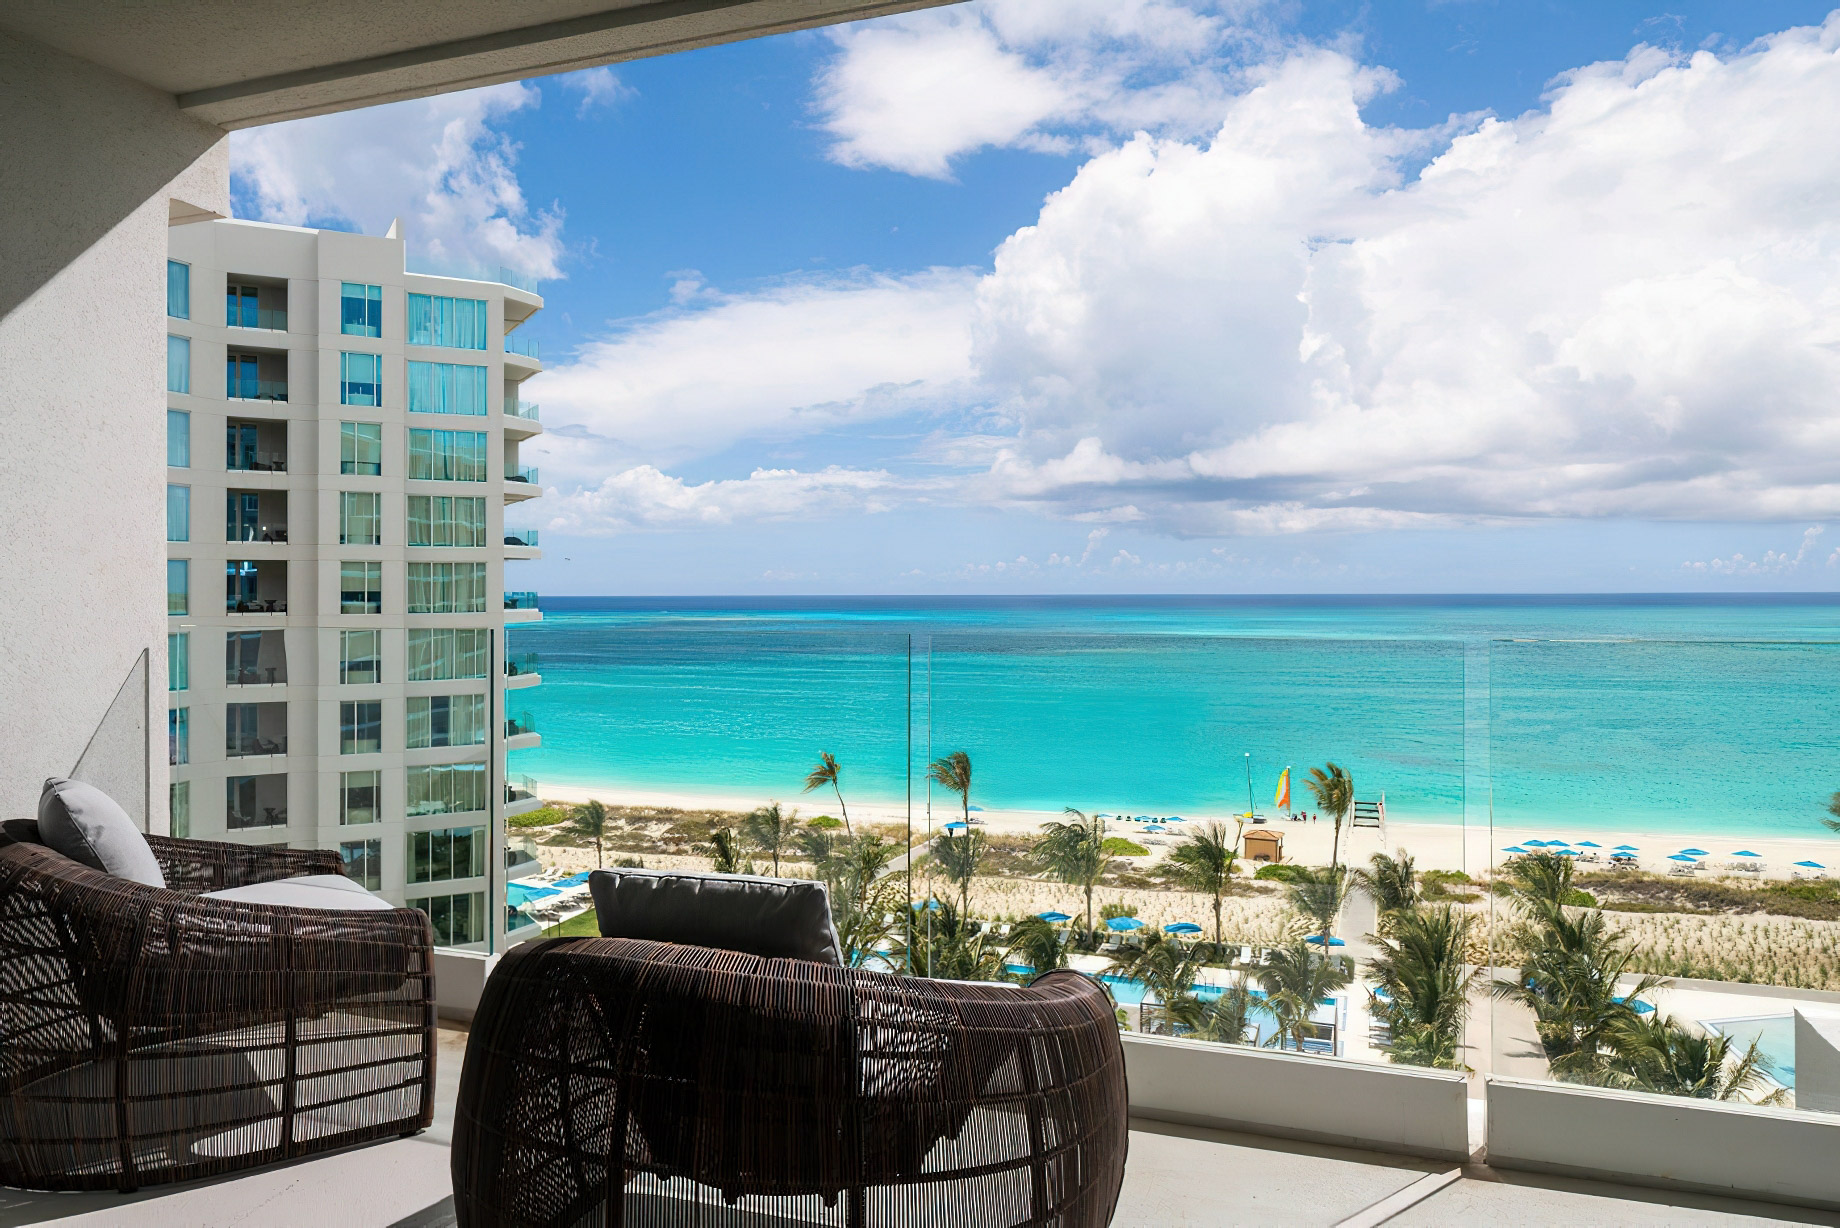 The Ritz-Carlton, Turks & Caicos Resort – Providenciales, Turks and Caicos Islands – Junior Suite Oceanfront